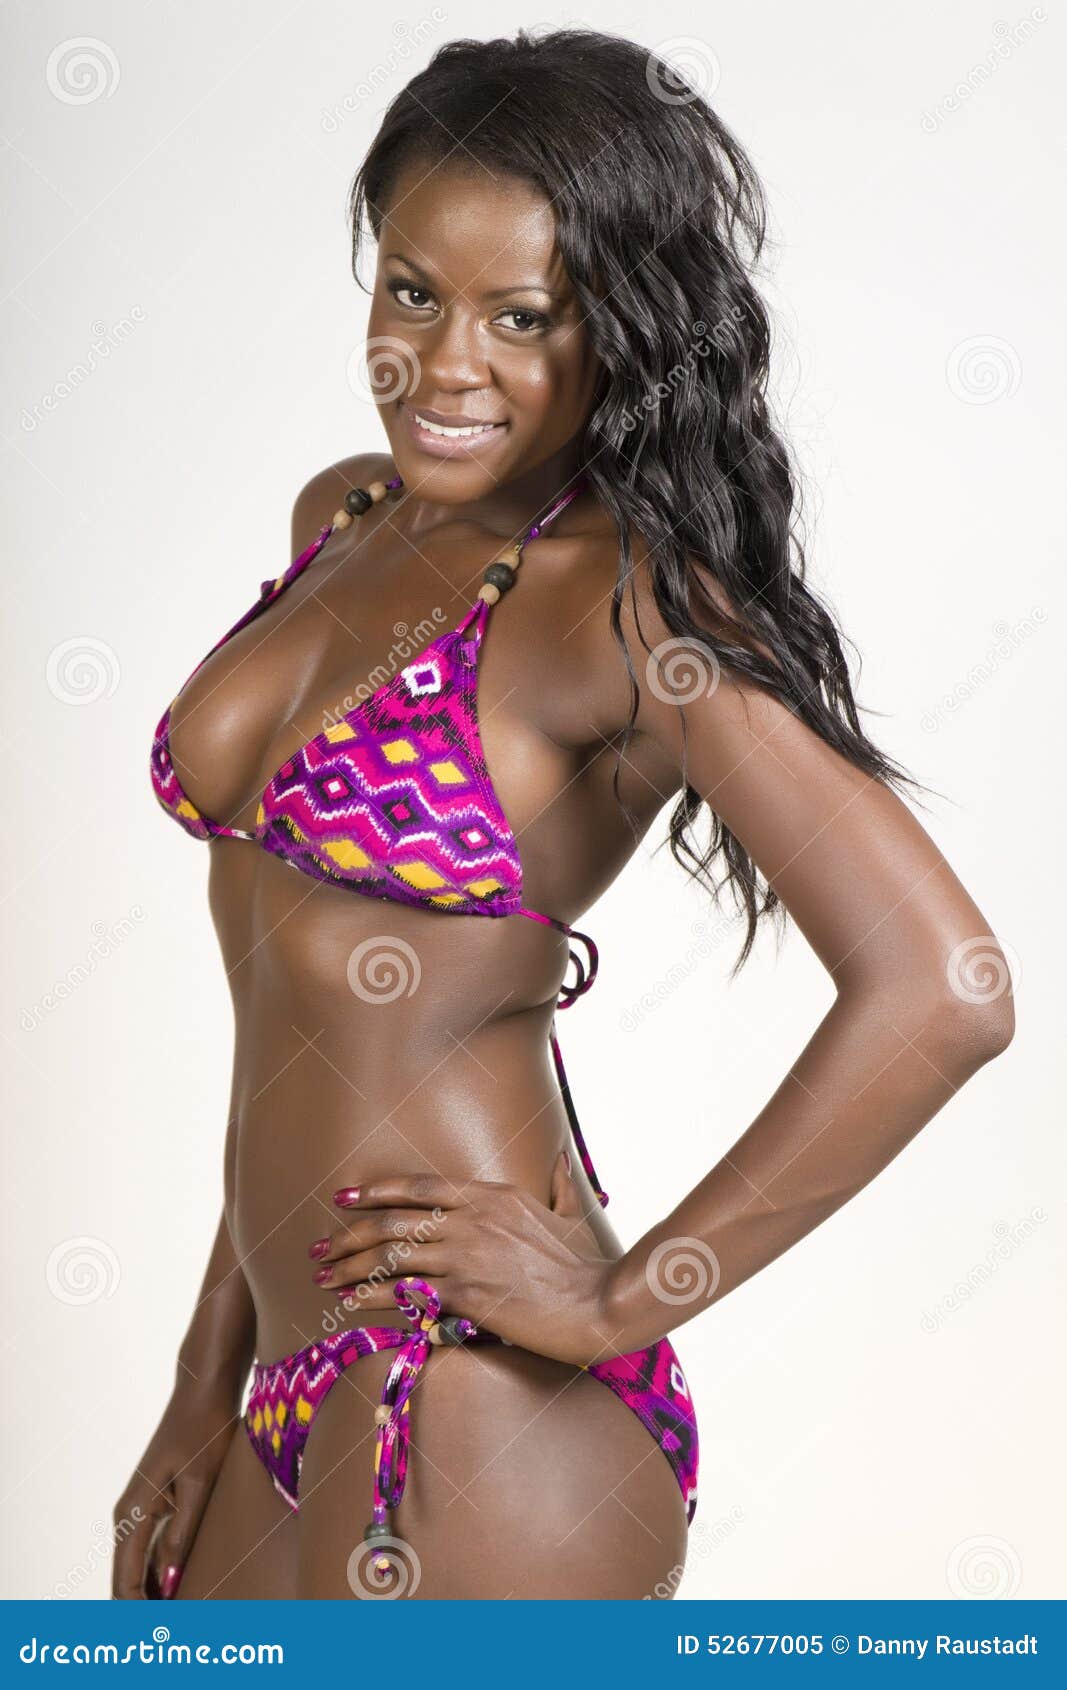 Young Black Woman in a Colorful Bikini Stock Image - Image of